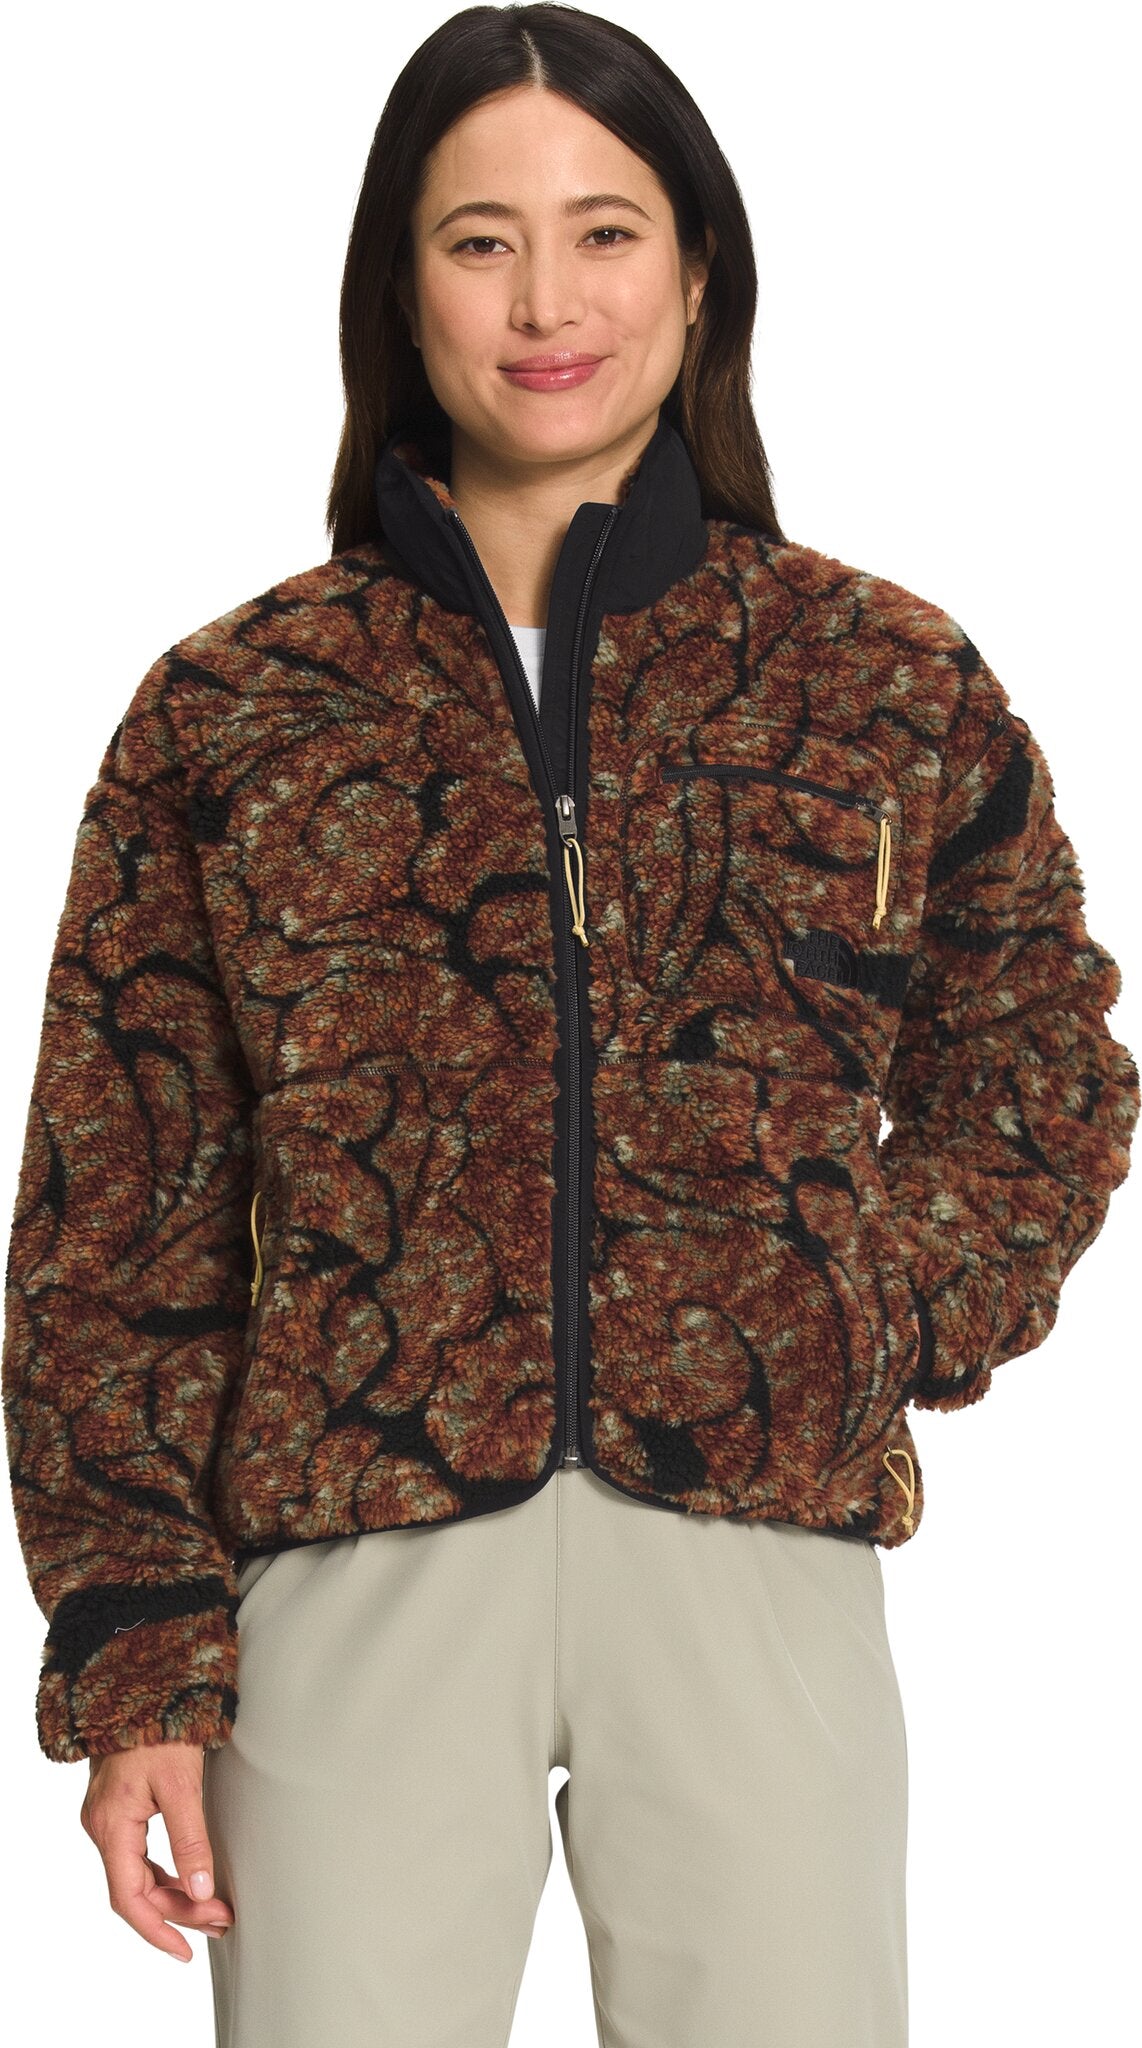 The North Face Men's Jacquard Pile Full Zip Jacket